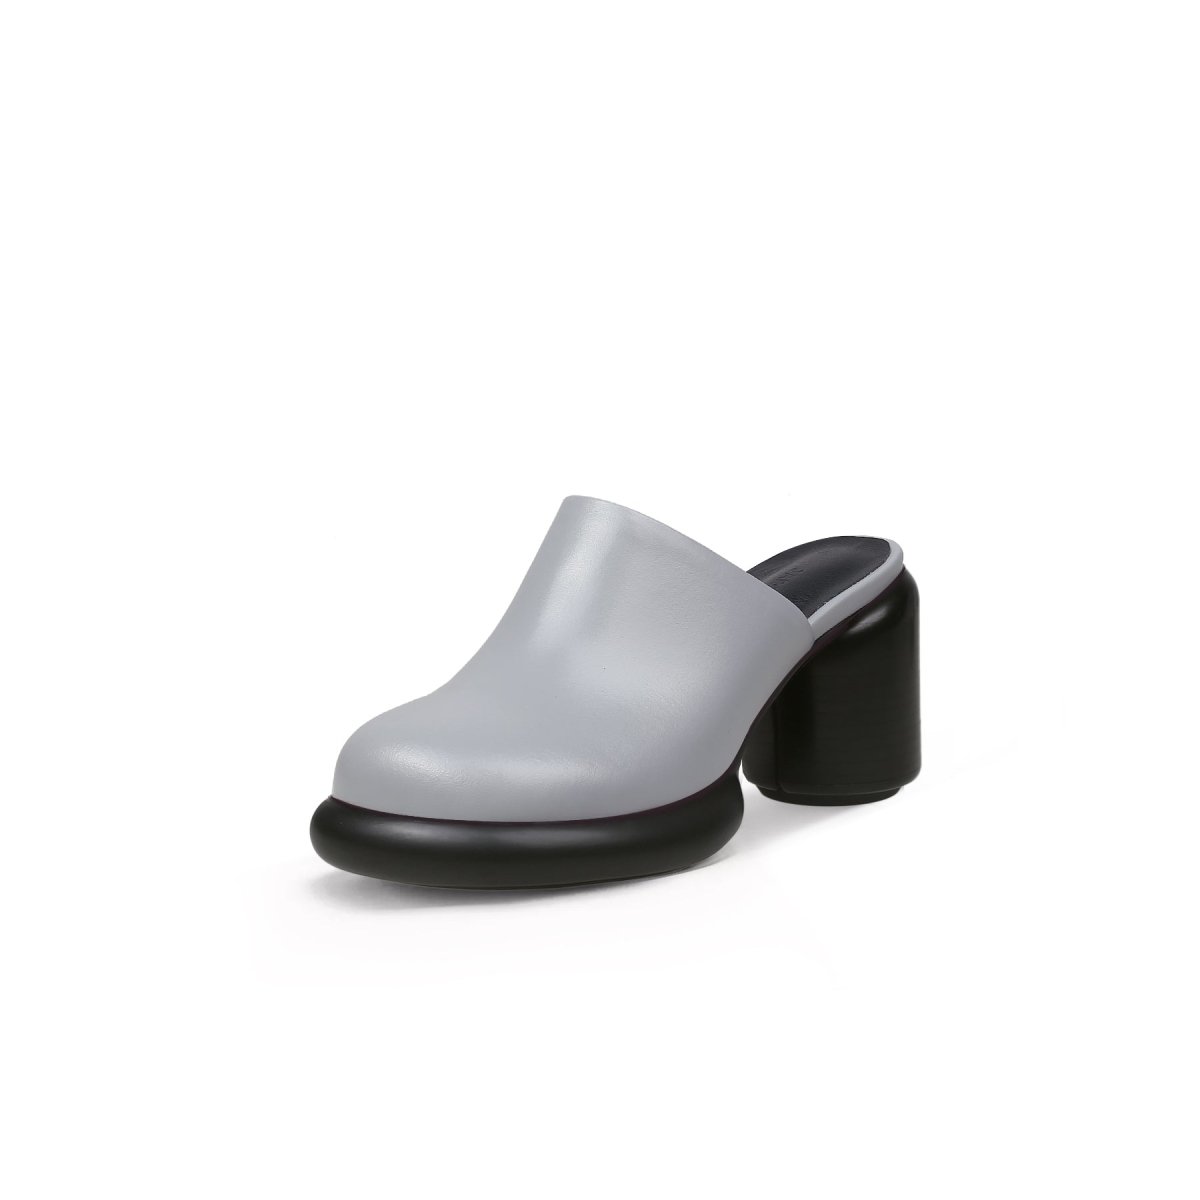 Donut Stool-heel Grey Mules - 0cm